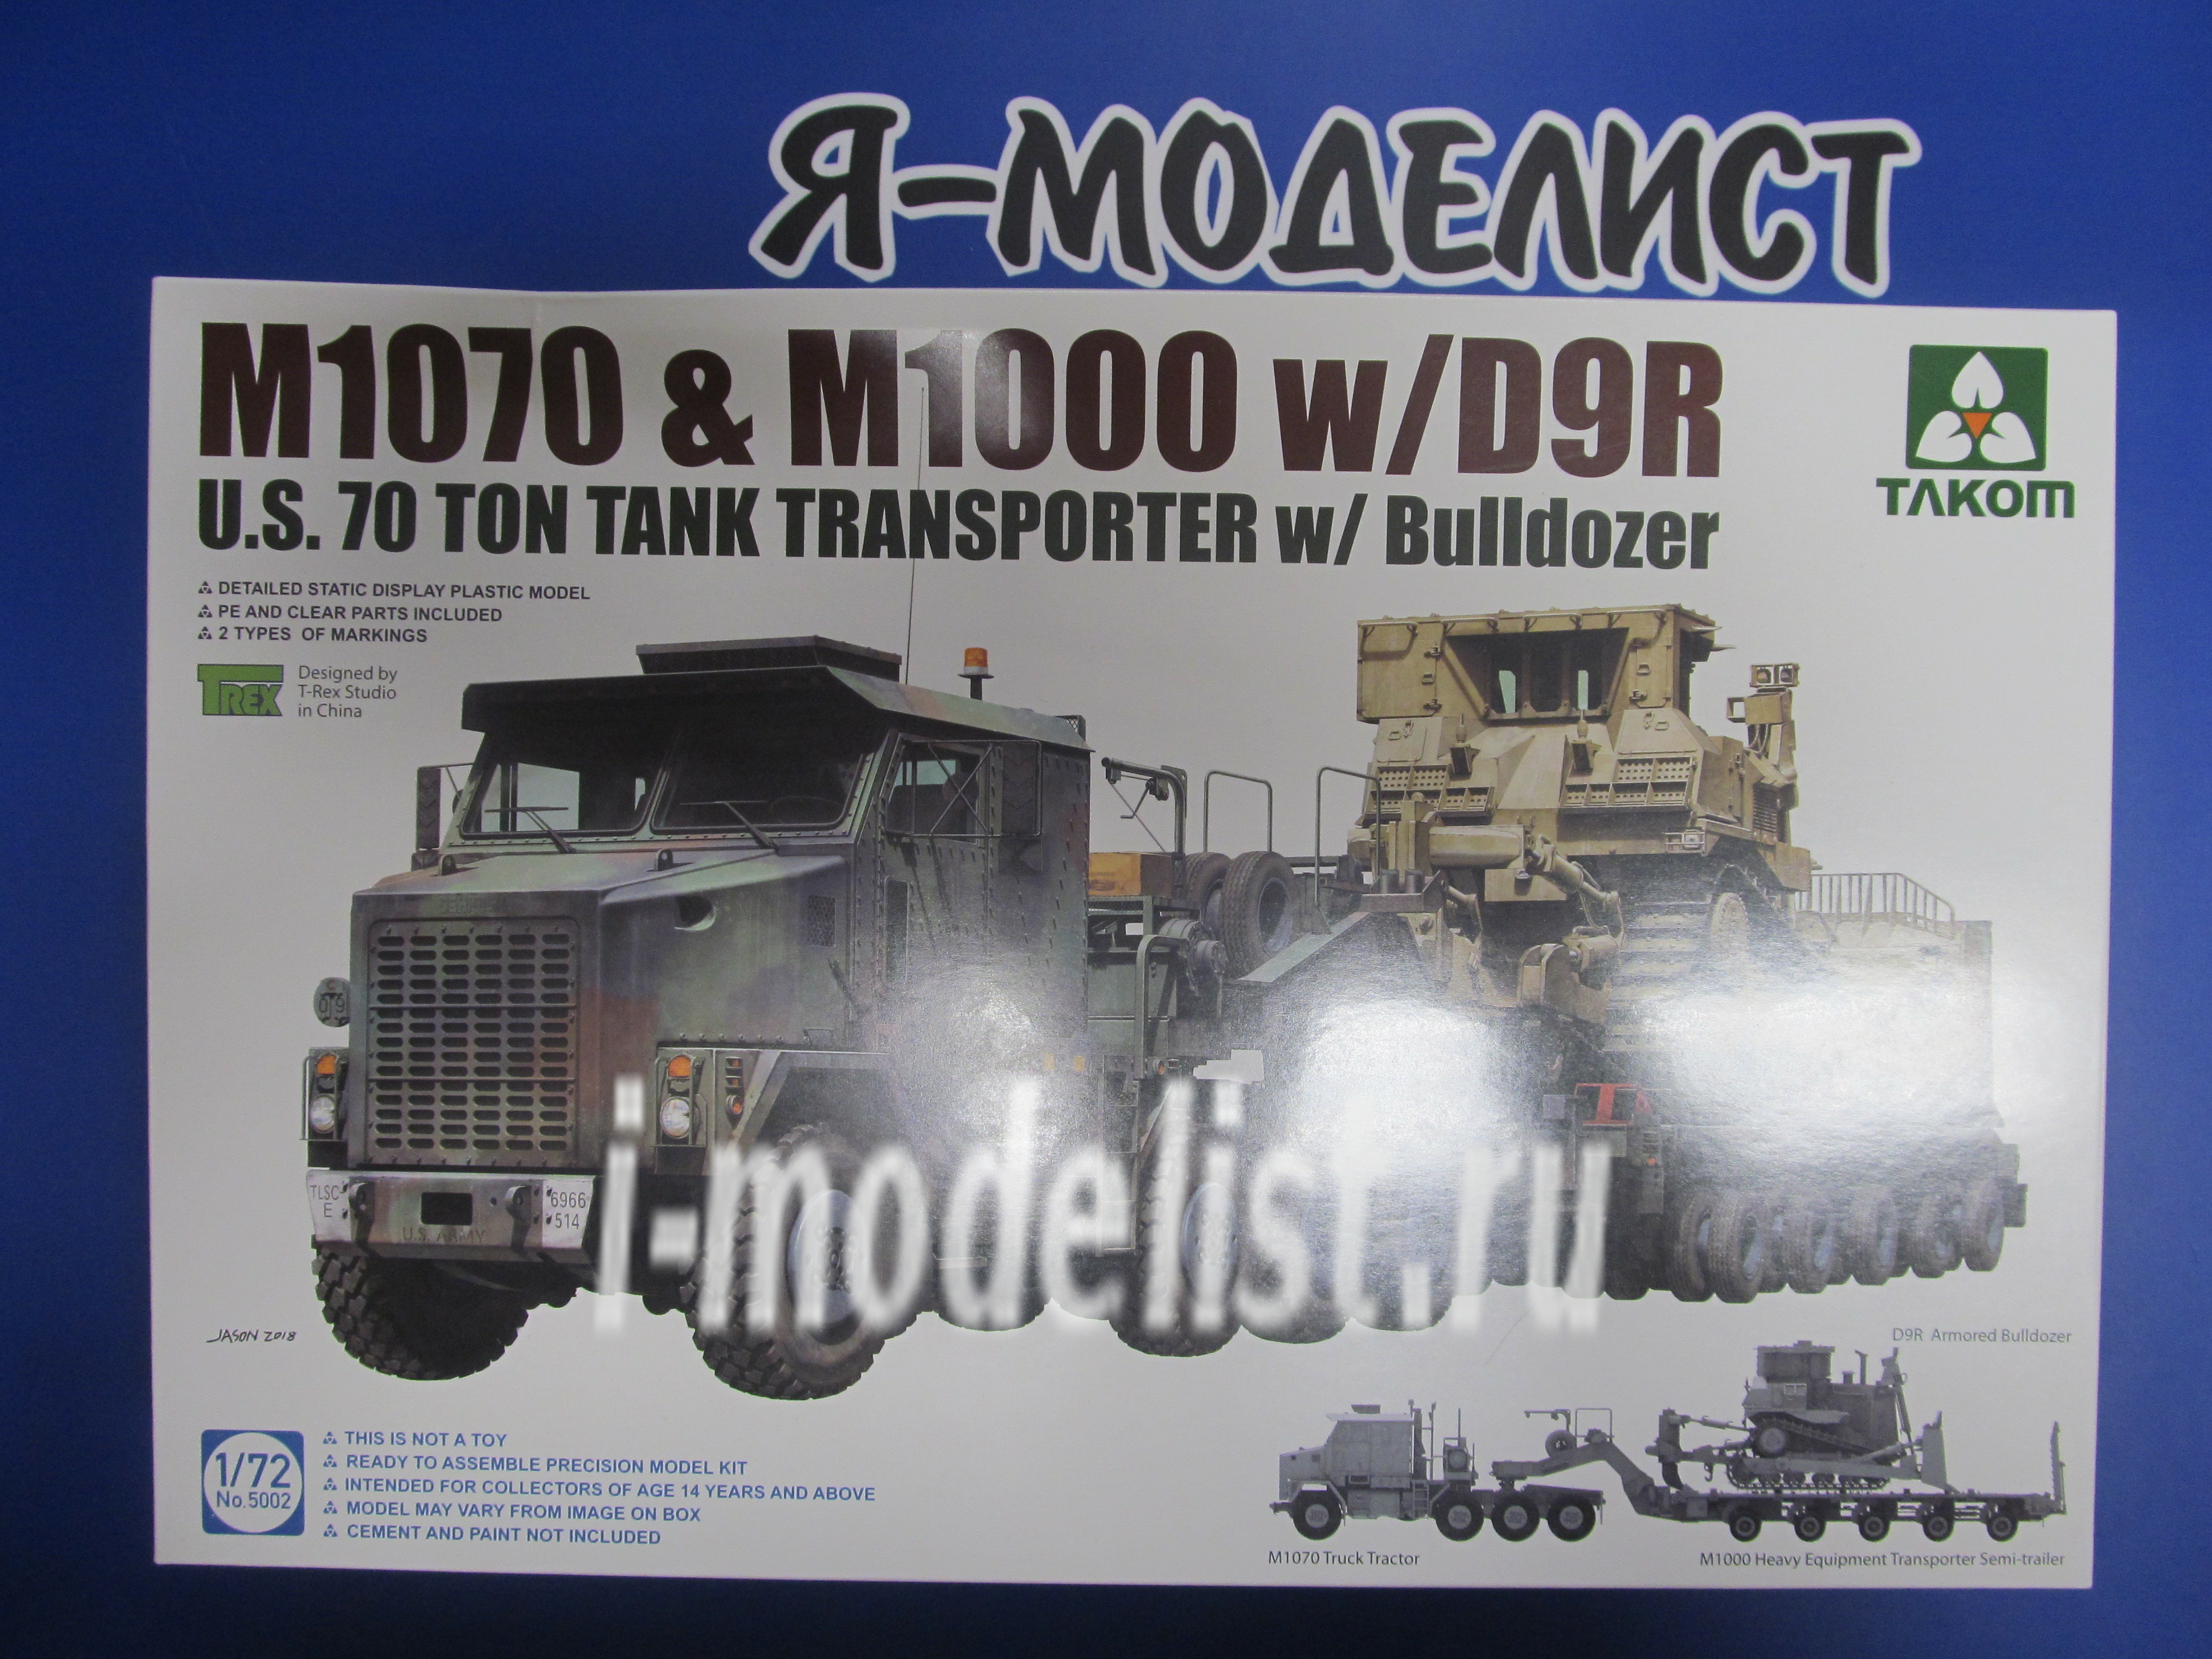 5002 Takom 1/72 U.S. M1070&M1000 w/D9R 70 Ton Tank Transporter w/Bulldozer